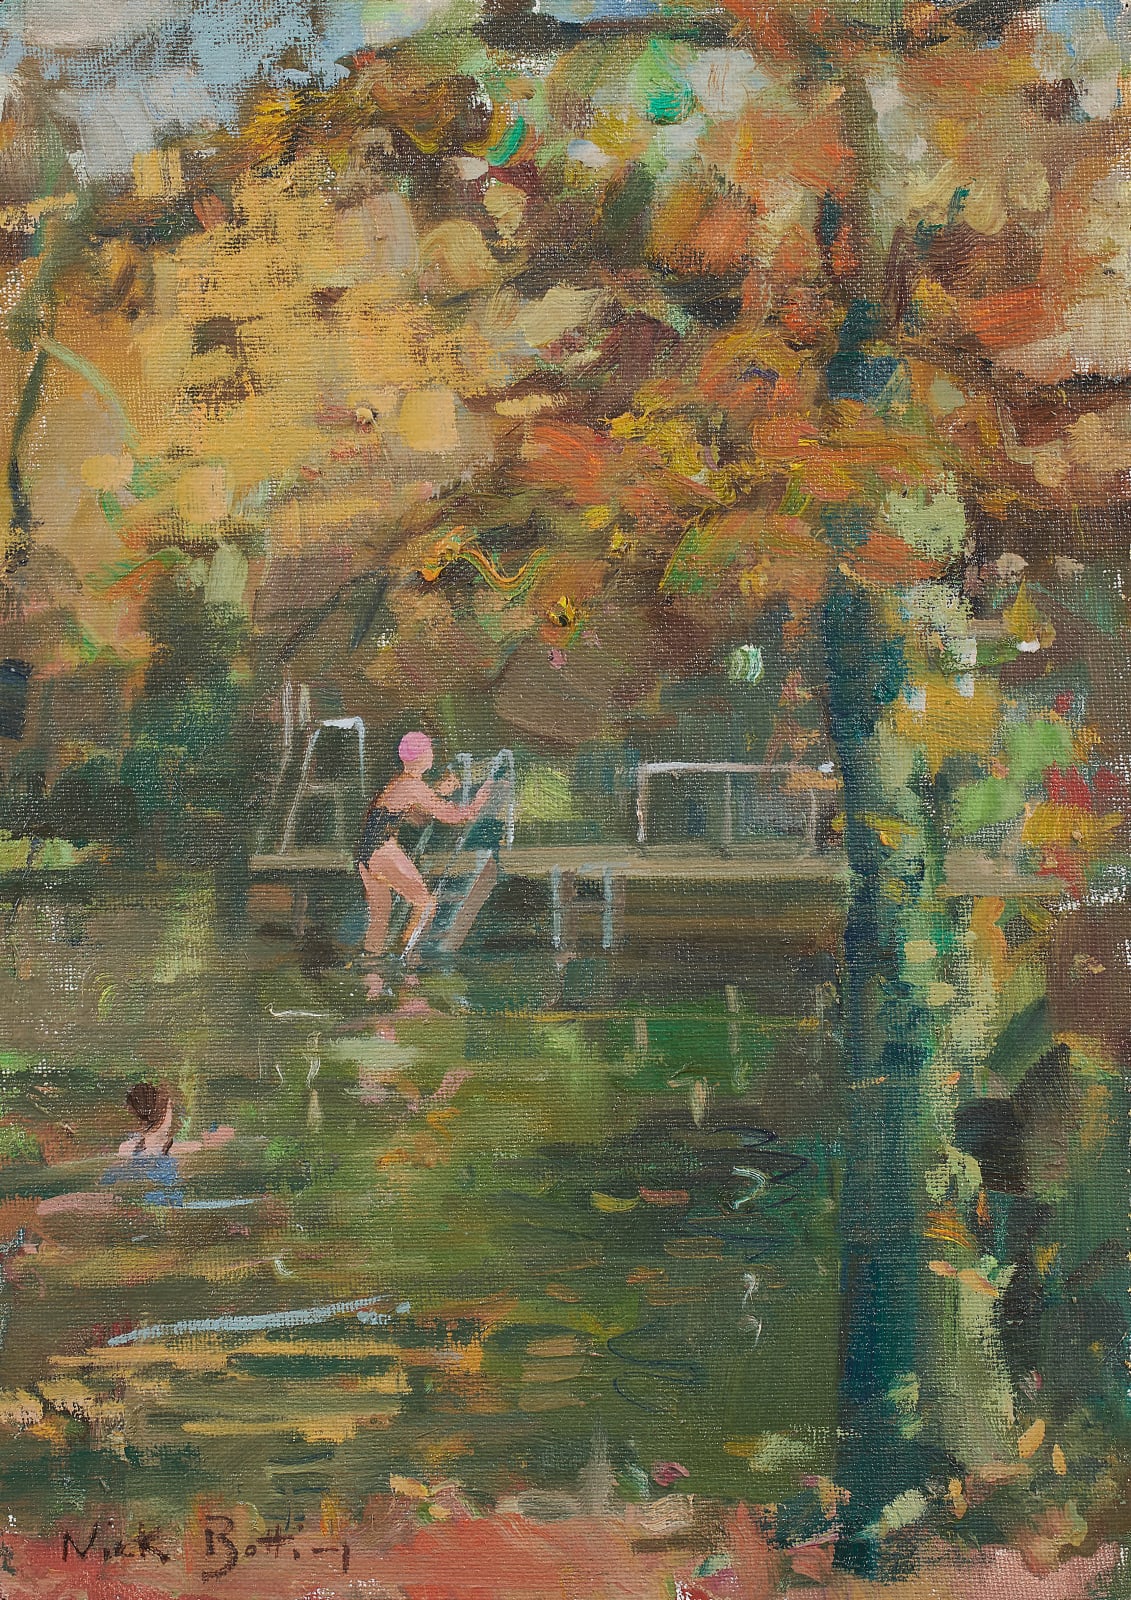 Nick Botting, 60. The Autumn Swimmers, Kenwood Ladies' Pond